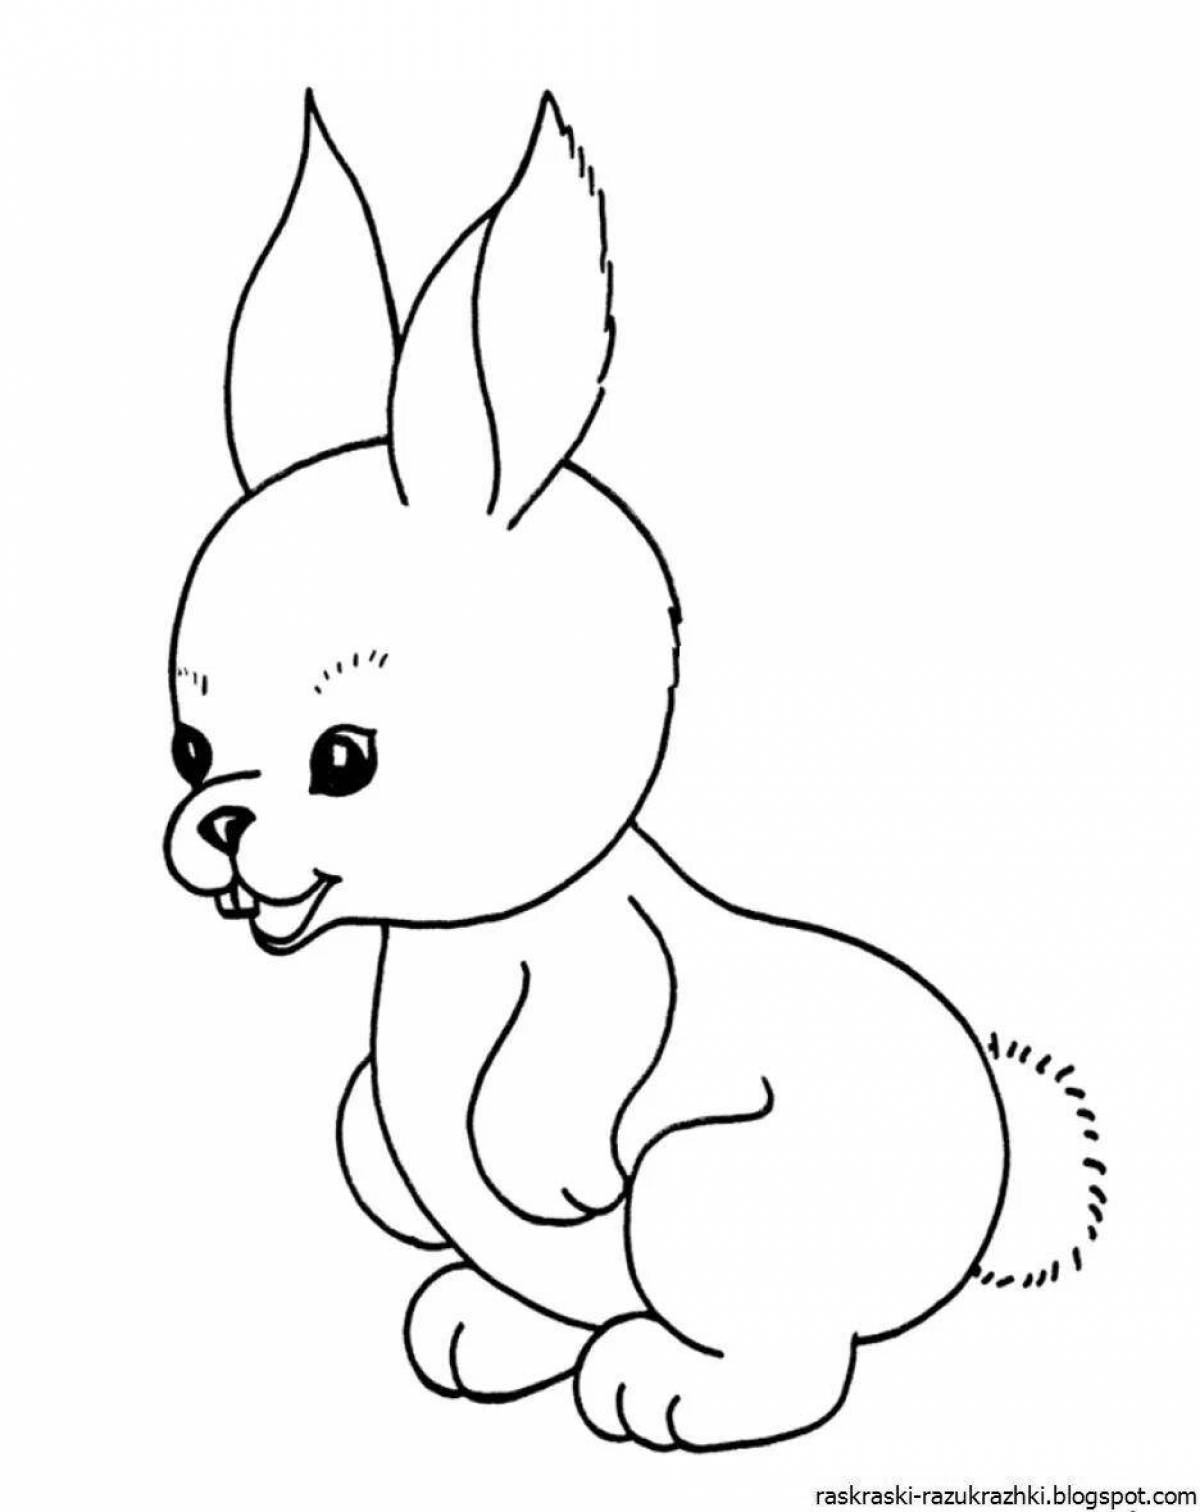 Snuggable coloring page bunny для детей